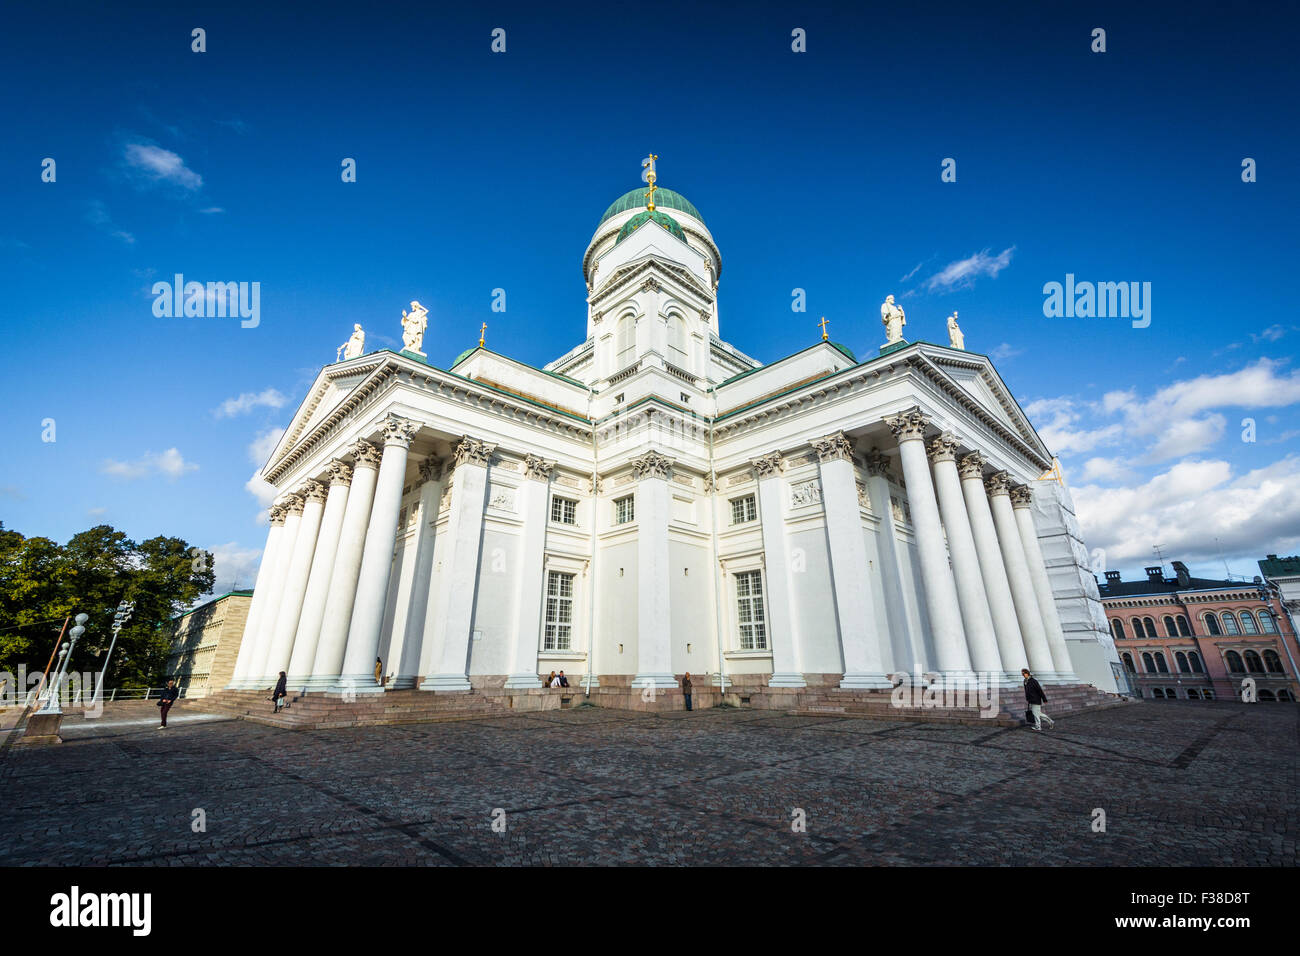 La Cathédrale d'Helsinki, à Helsinki, en Finlande. Banque D'Images